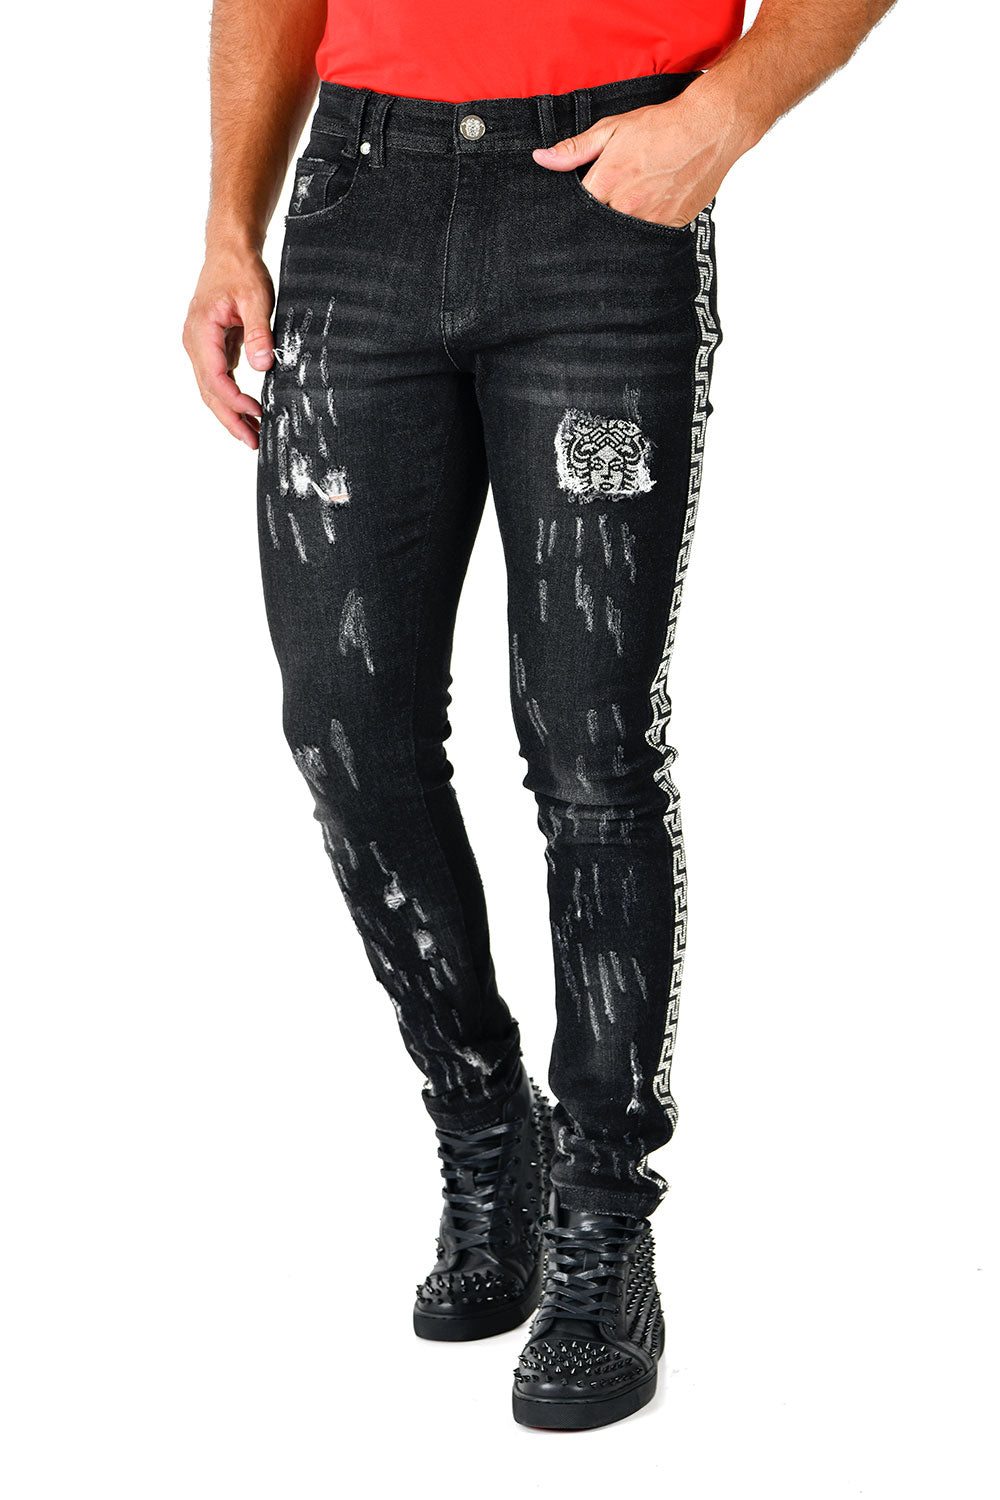 BARABAS Mens Ripped Medusa Greek Pattern Rhinestone Denim Jeans SNG003 Black Silver